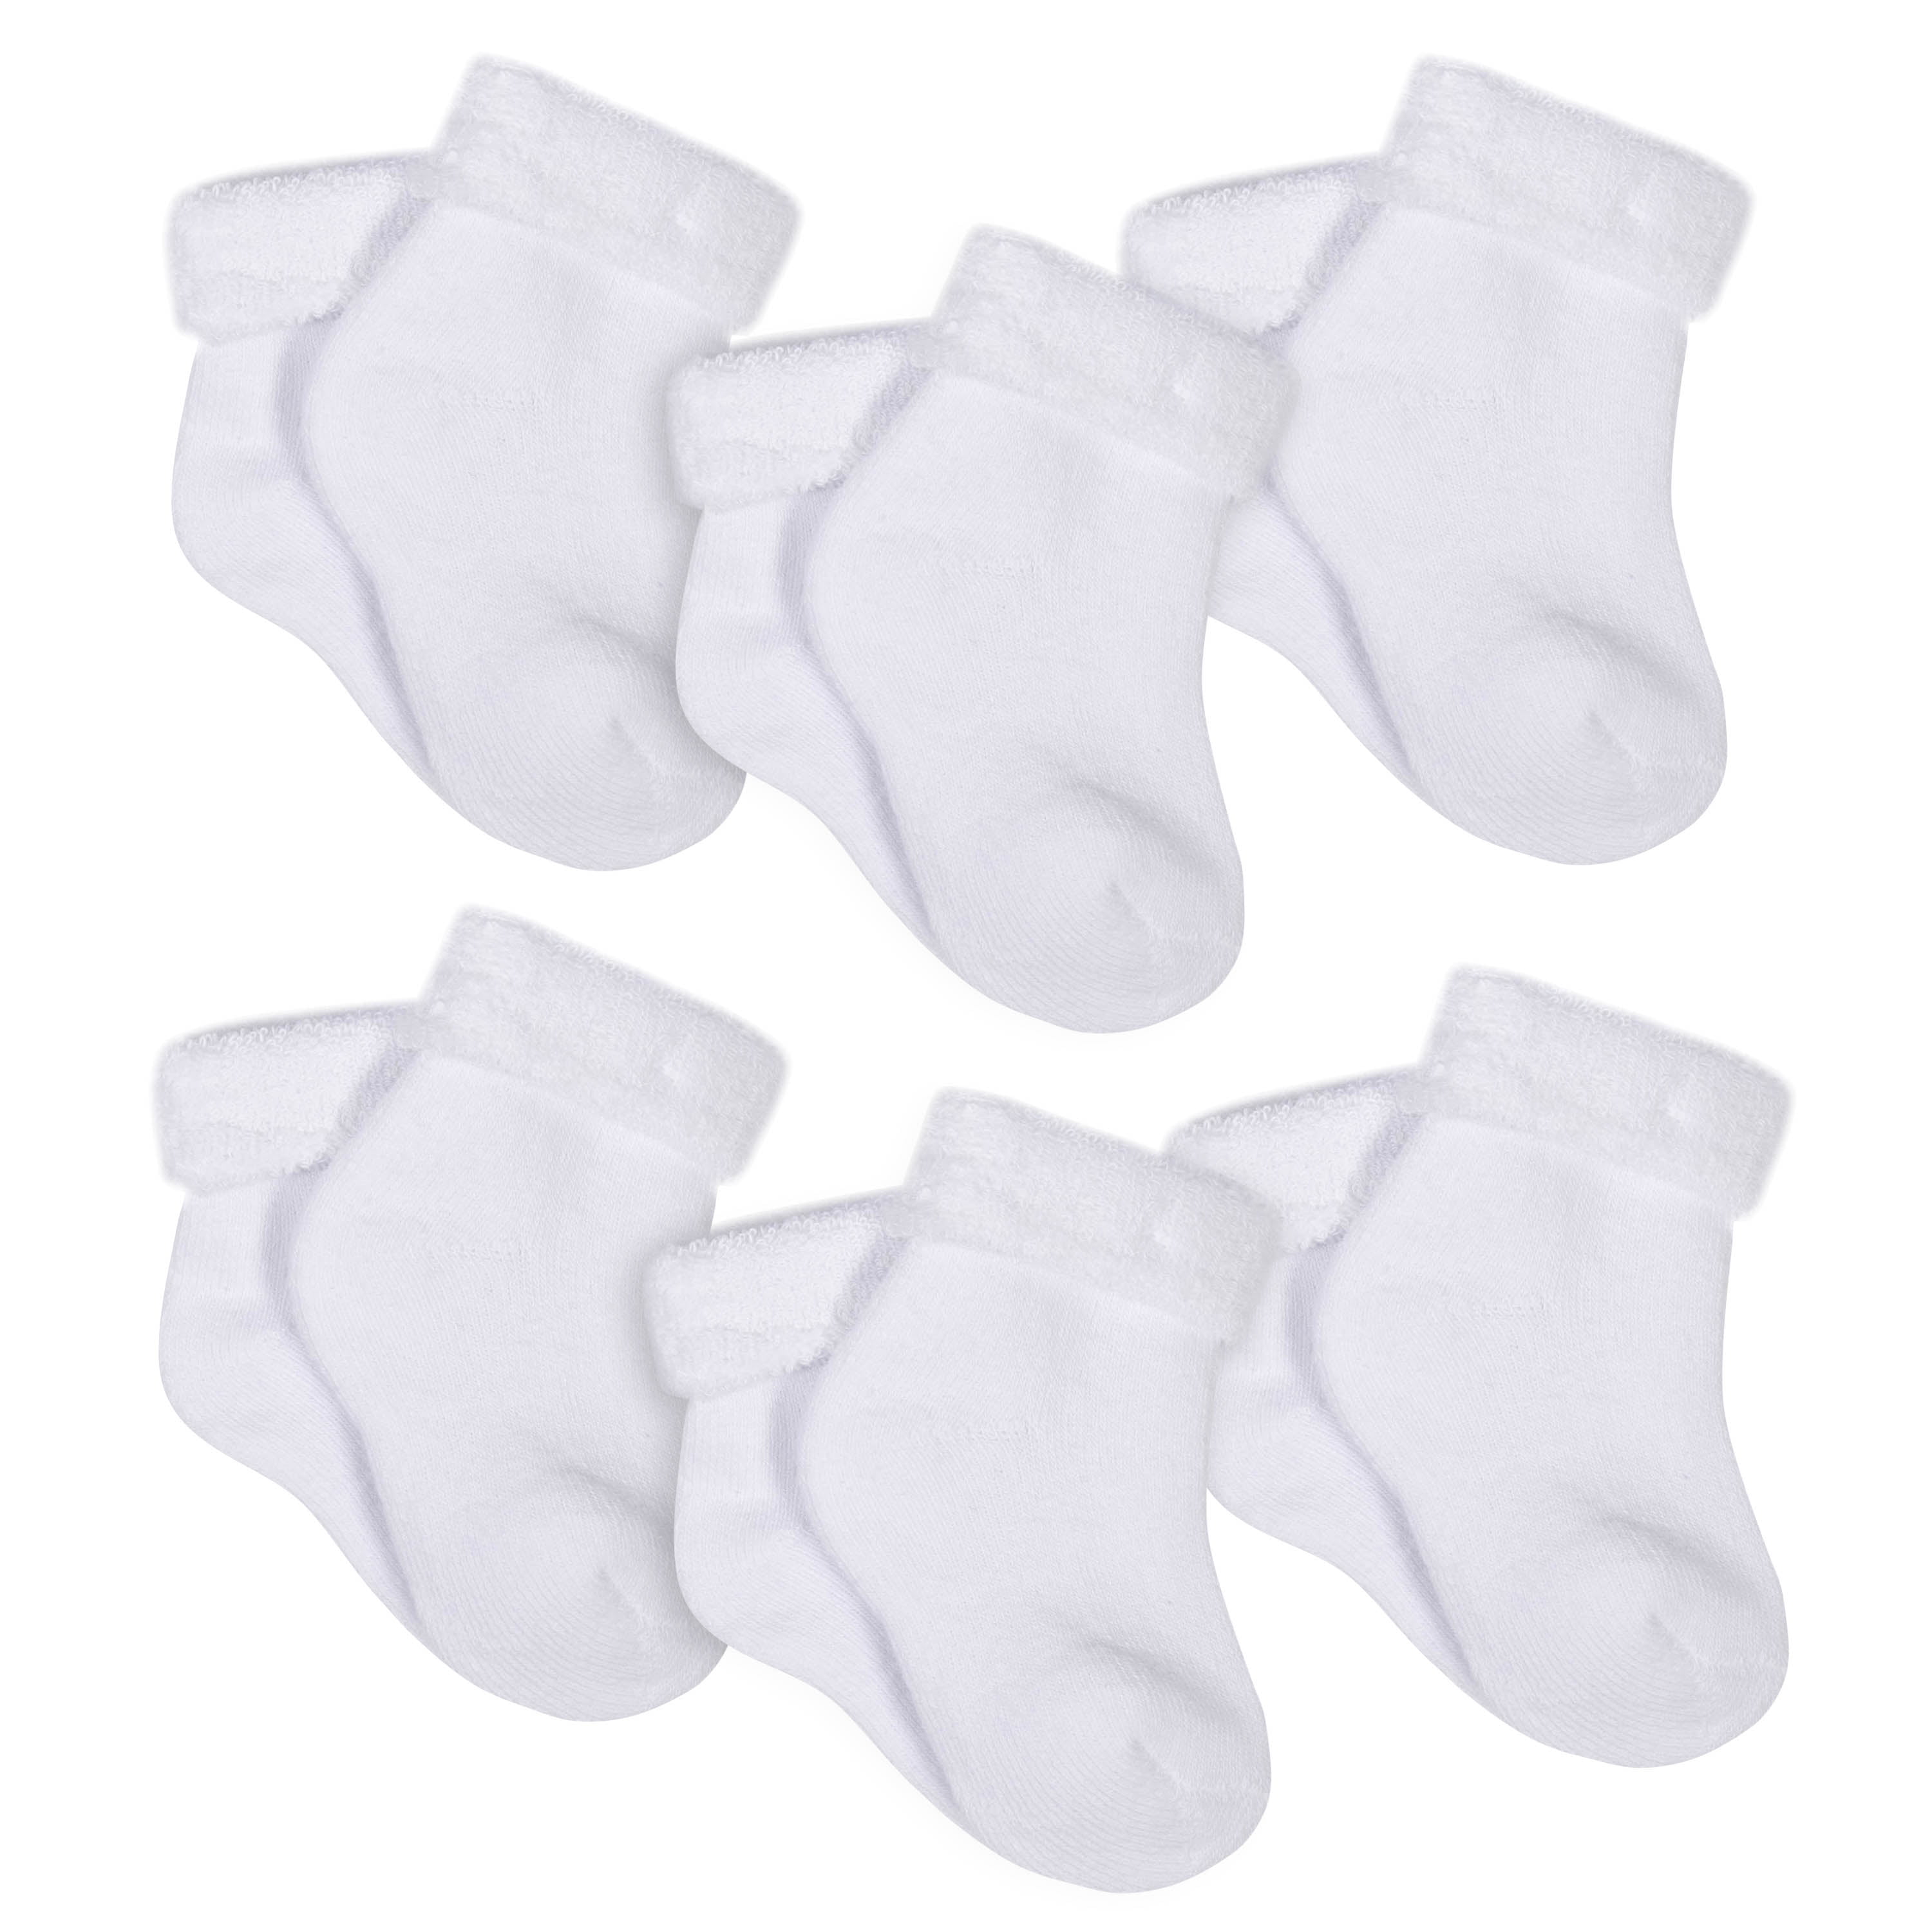 Baby Socks Boys Girls Socks Unisex Newborn Socks 0-6 Months 6-12 Months 10 Pairs 